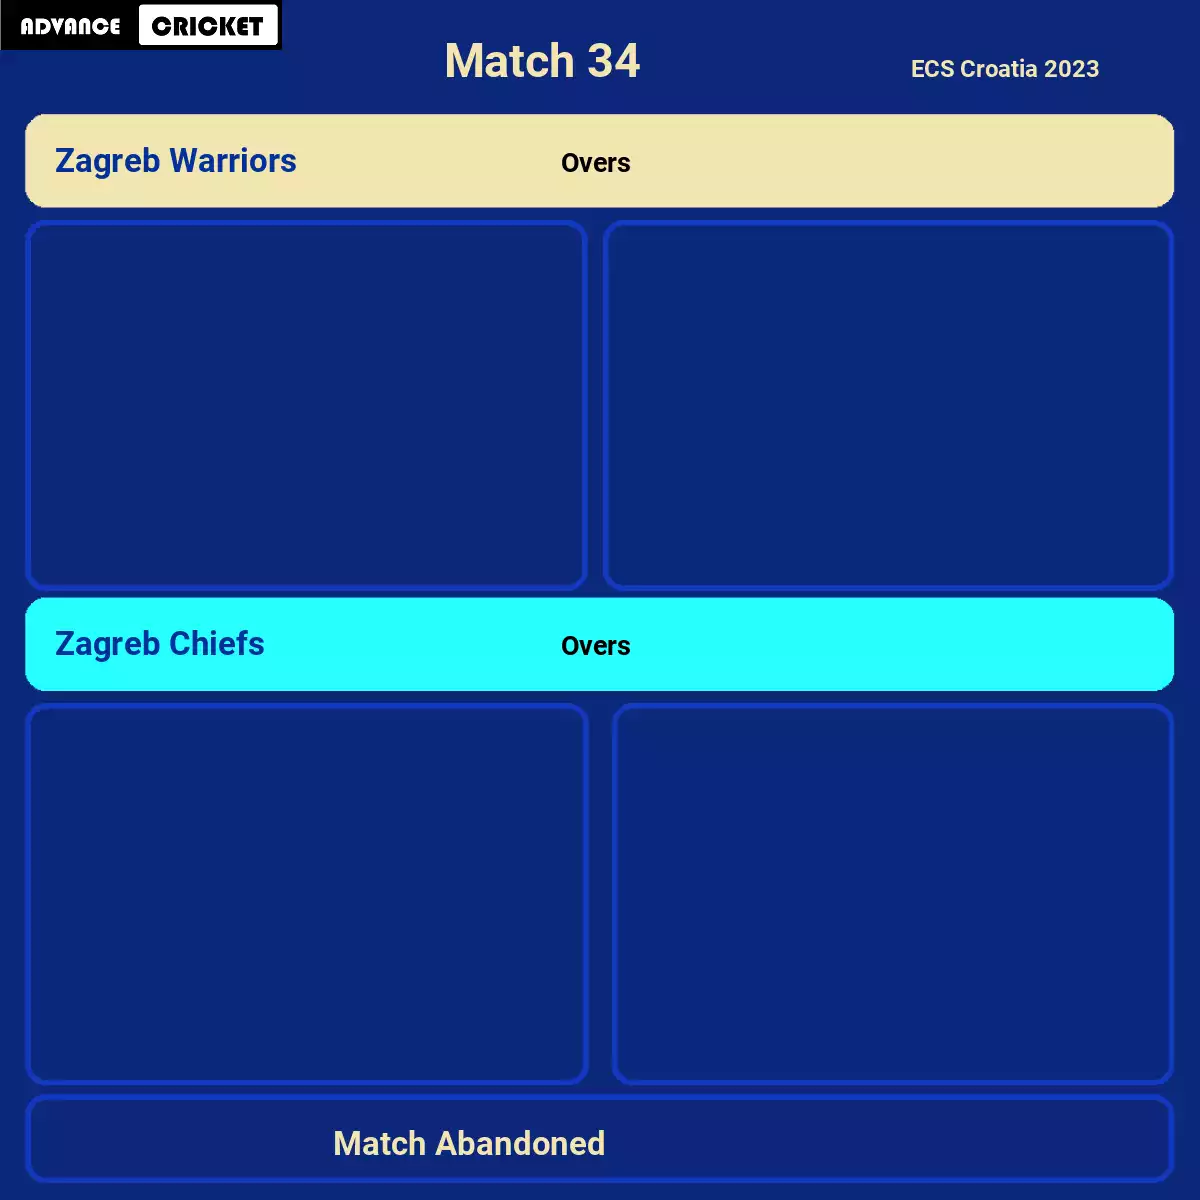 ZAS vs ZW Match 34 ECS Croatia 2023